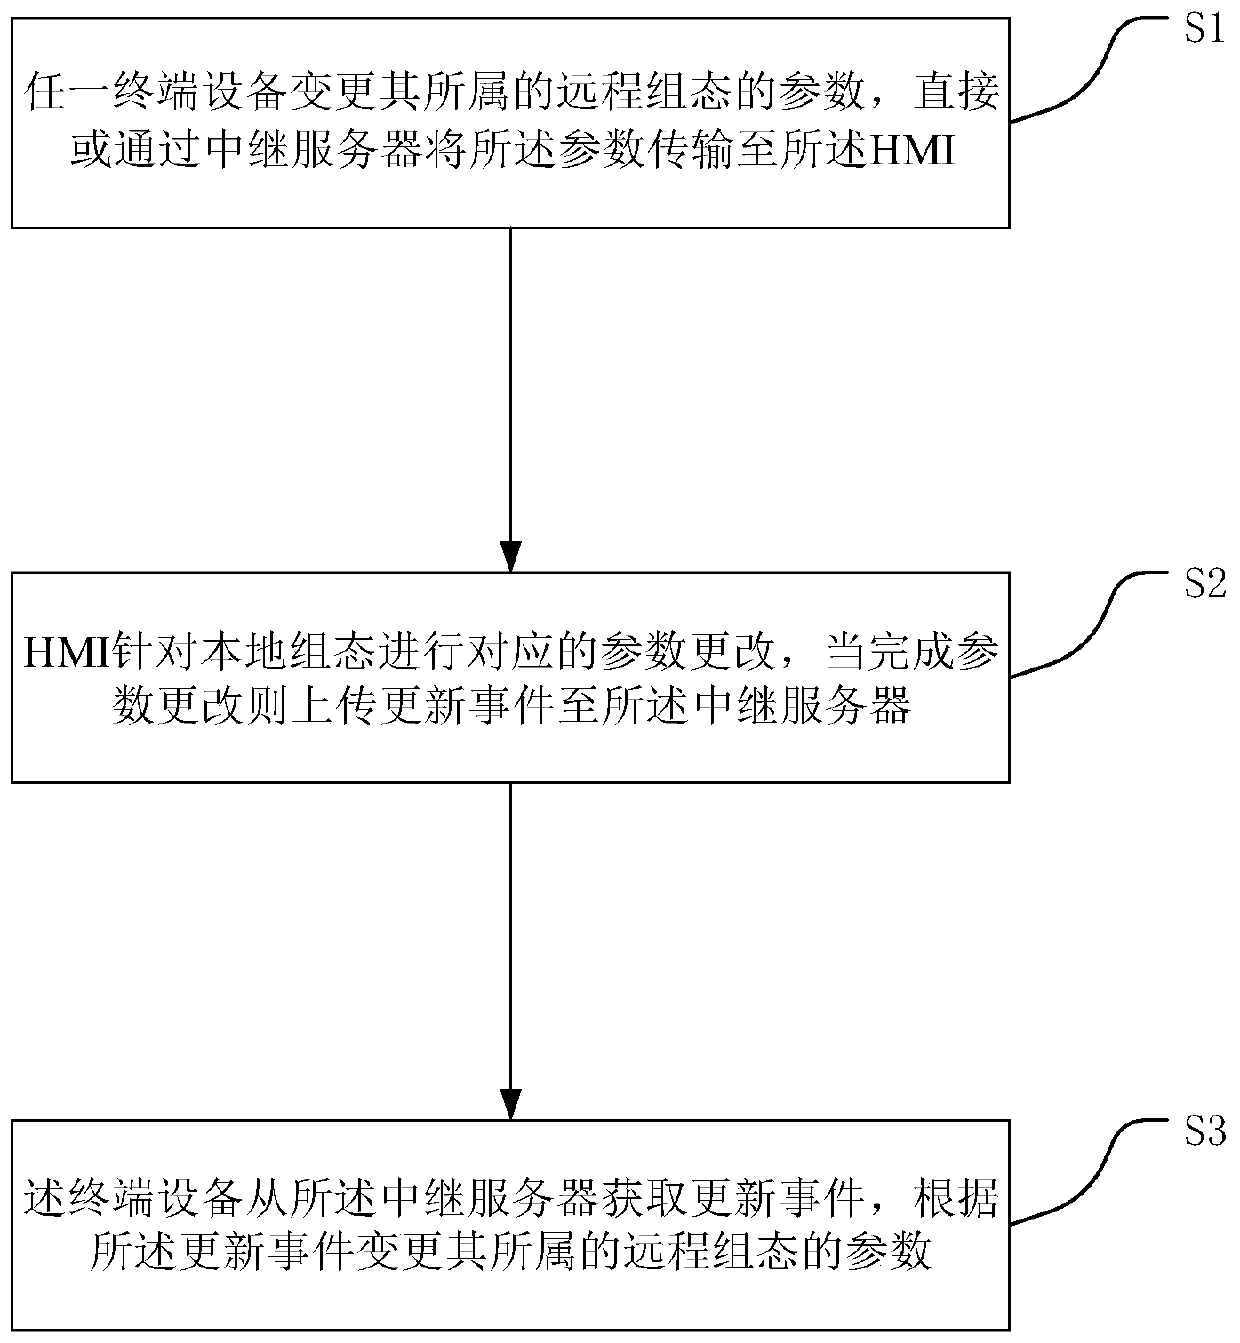 An HMI configuration synchronization system and method